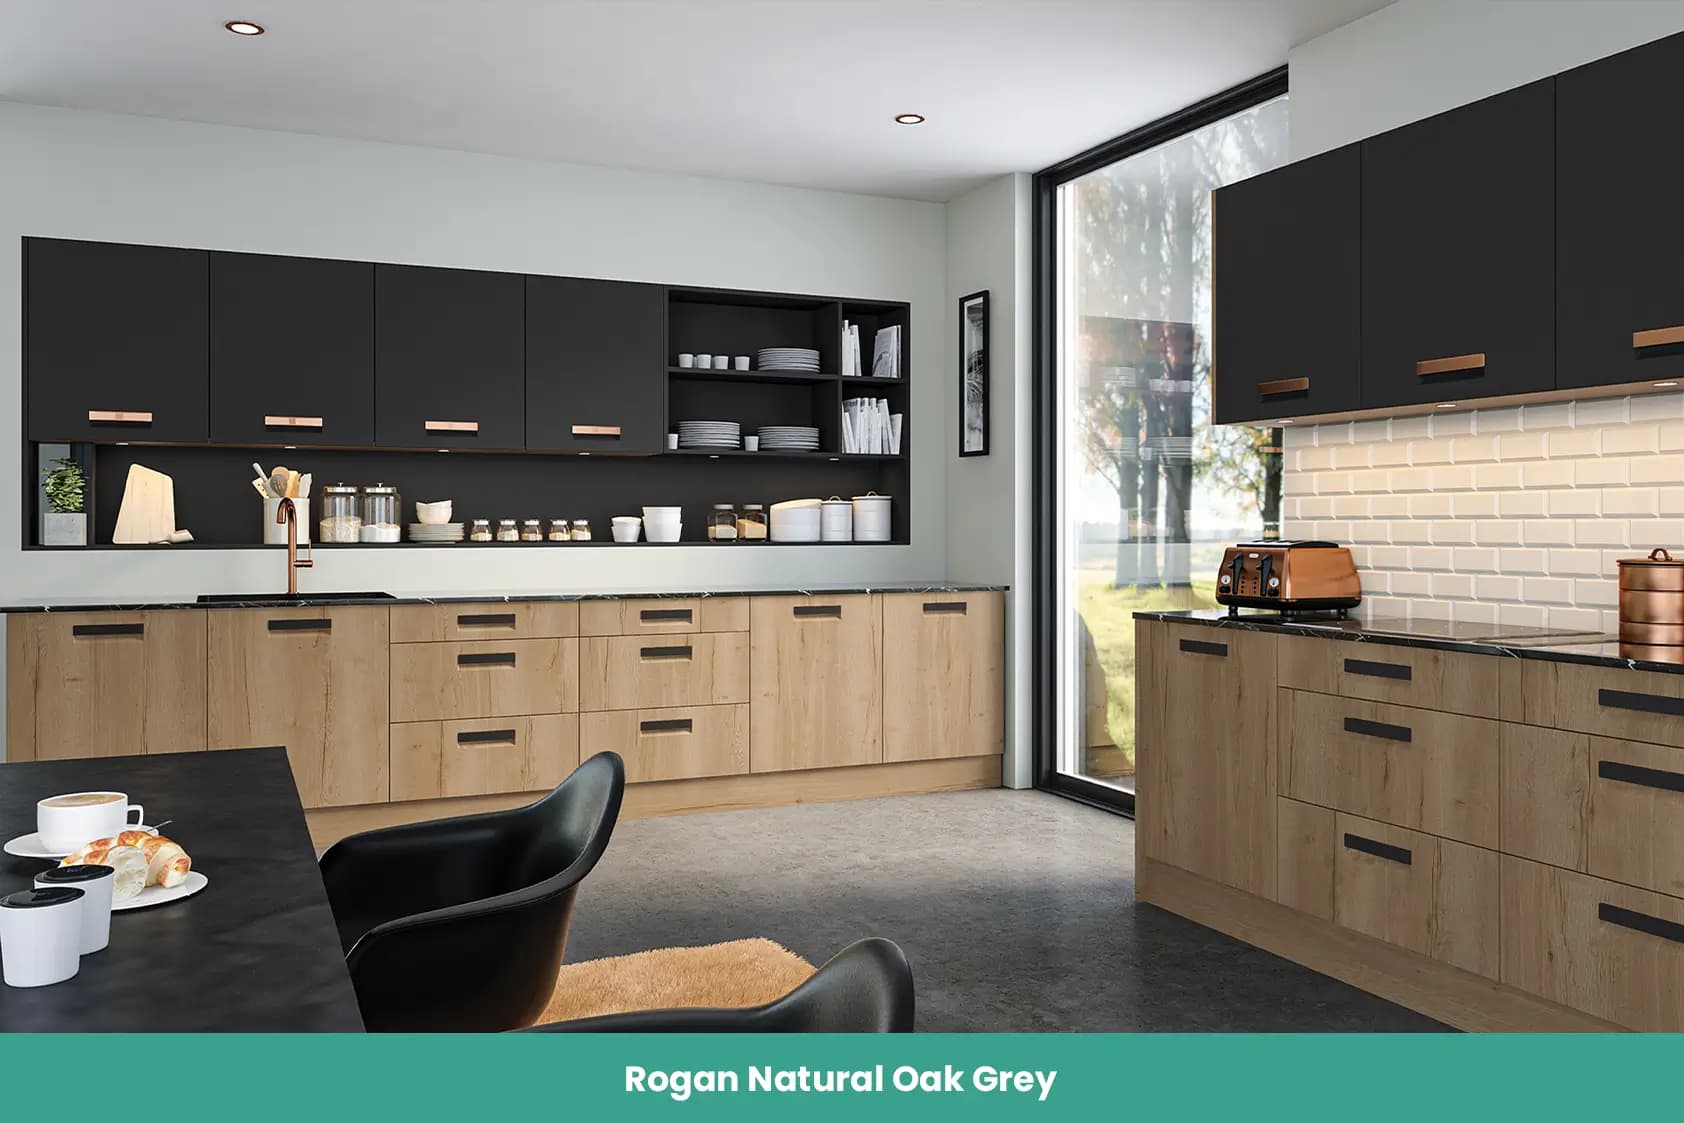 Rogan Natural Oak Grey Kitchen